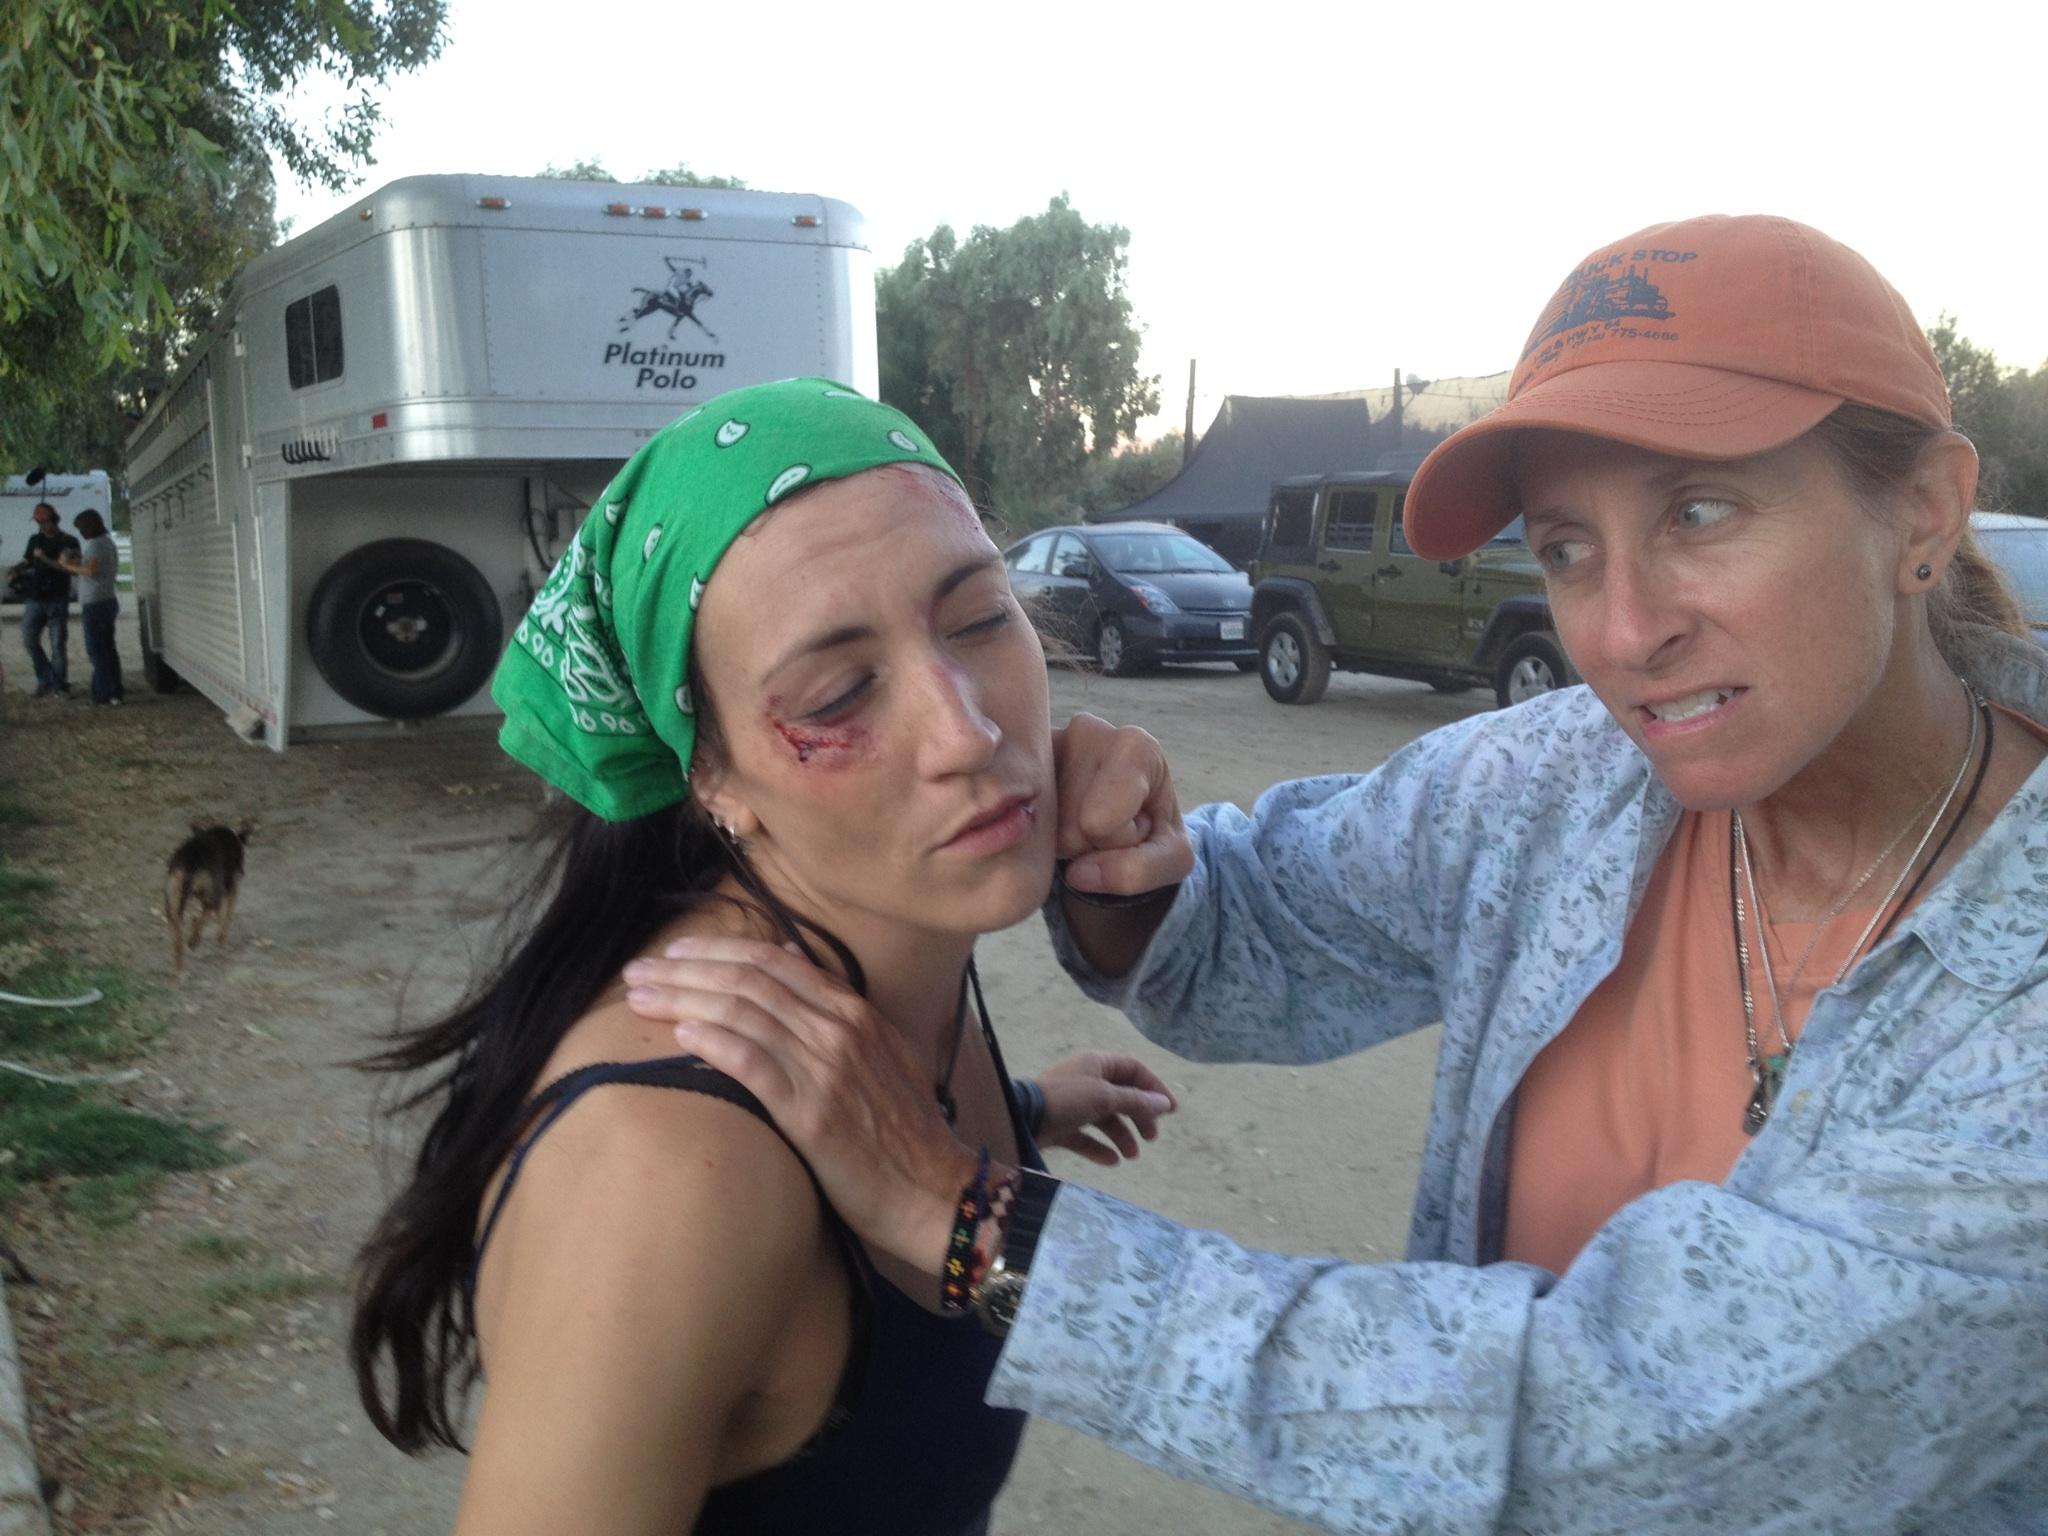 Behind the Scenes of Cowgirl Up Season 2, with writer/director Nancylee Myatt